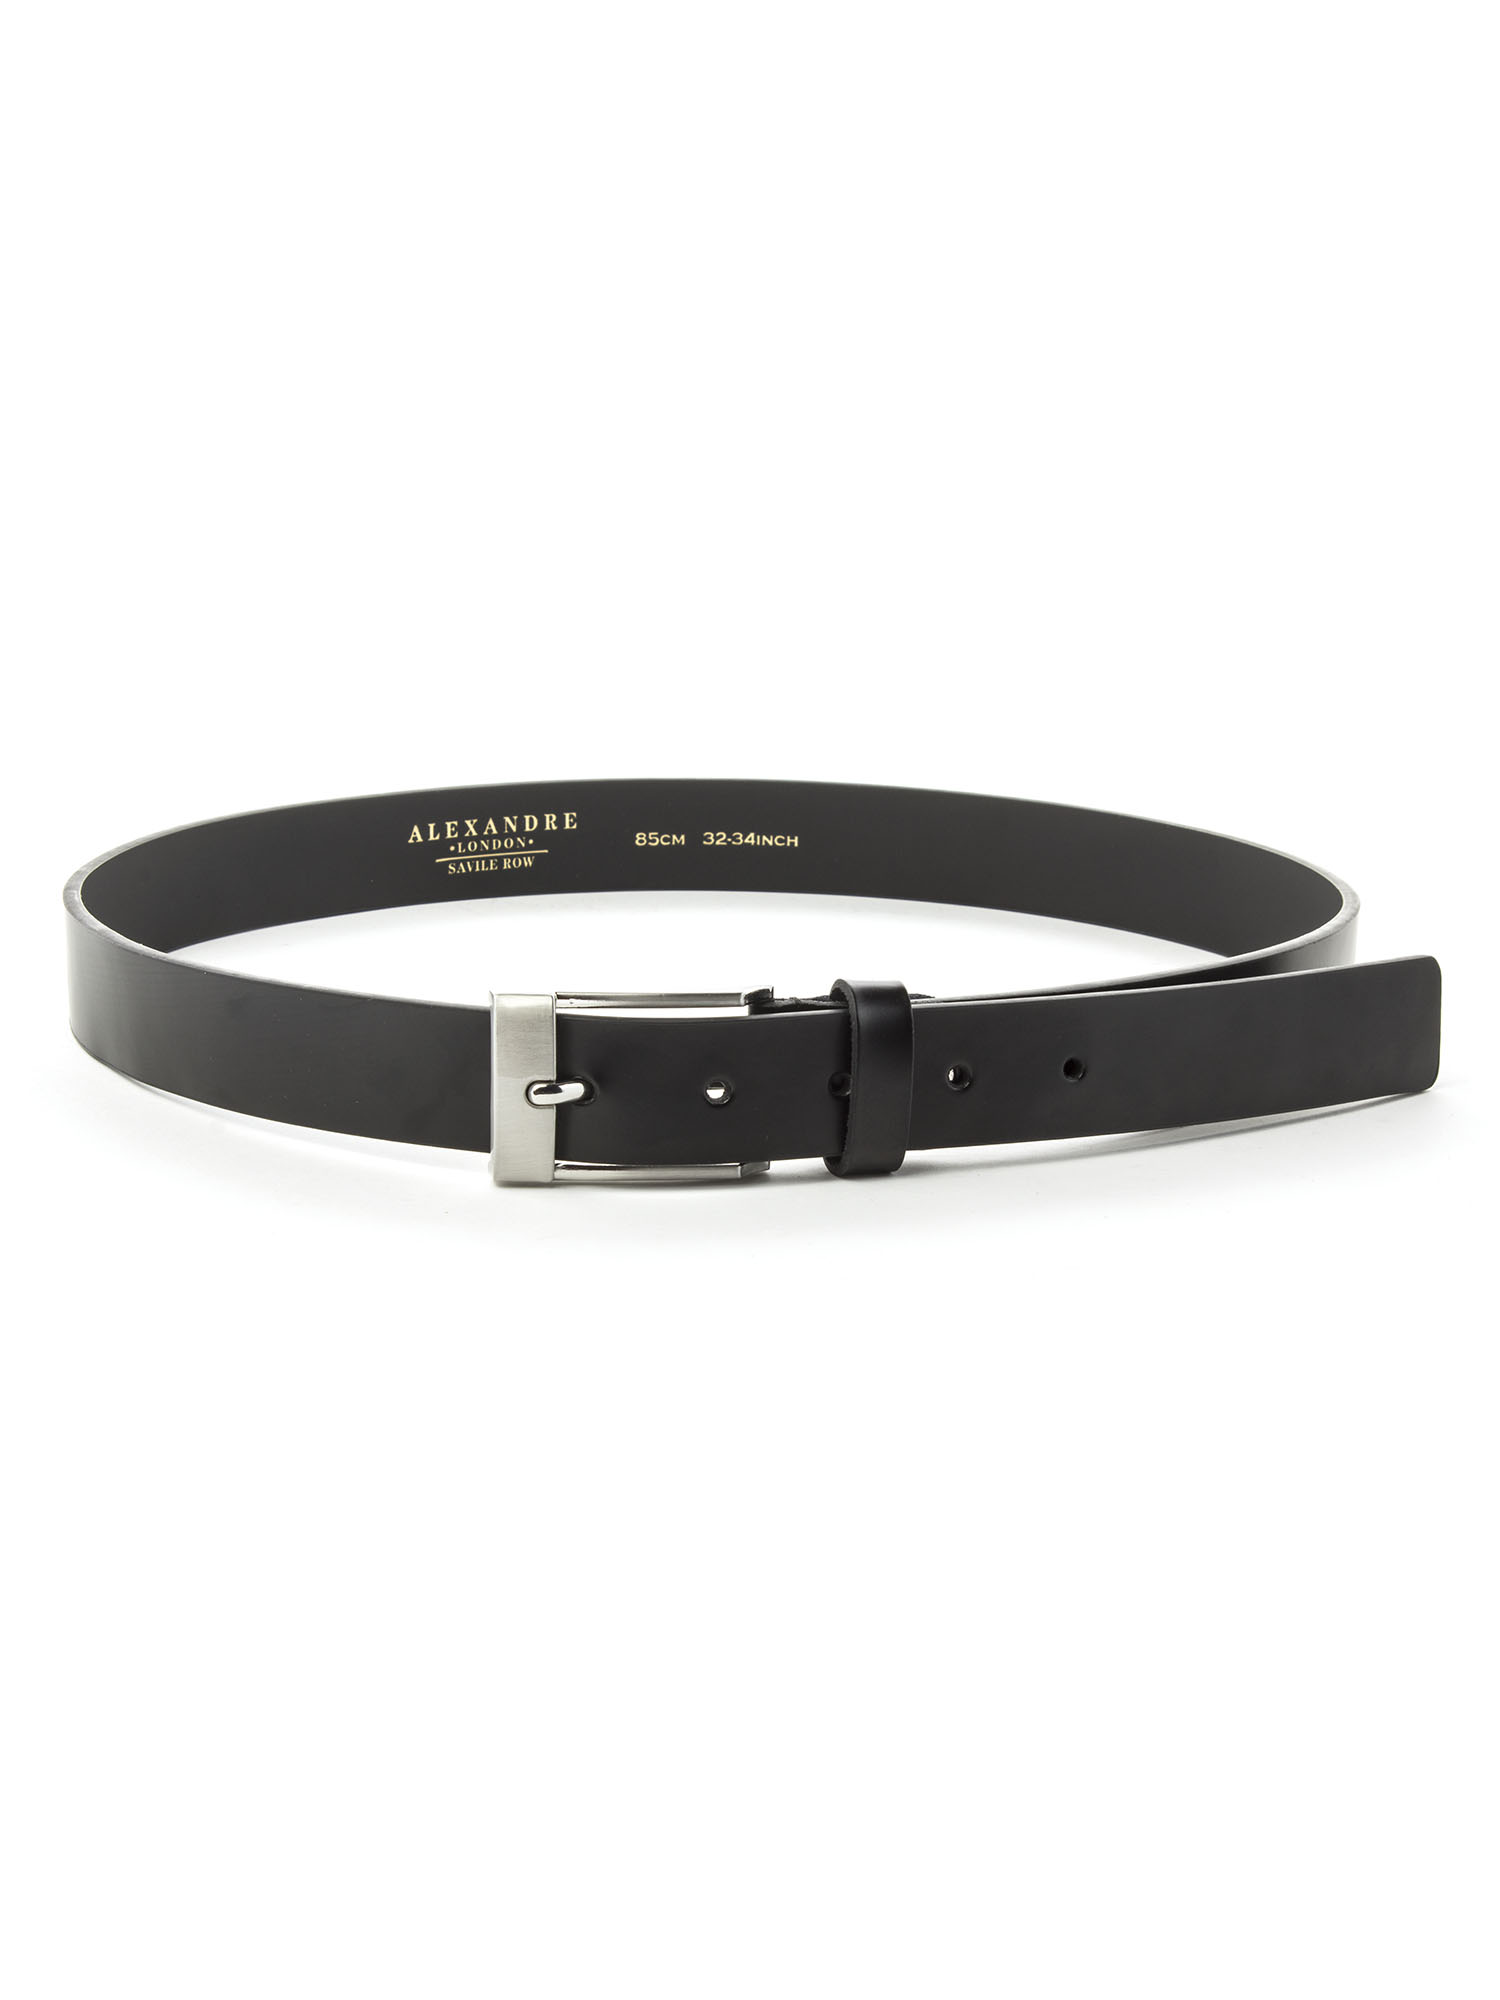 Black Leather Belt with Square Buckle - Alexandre London - Belts ...